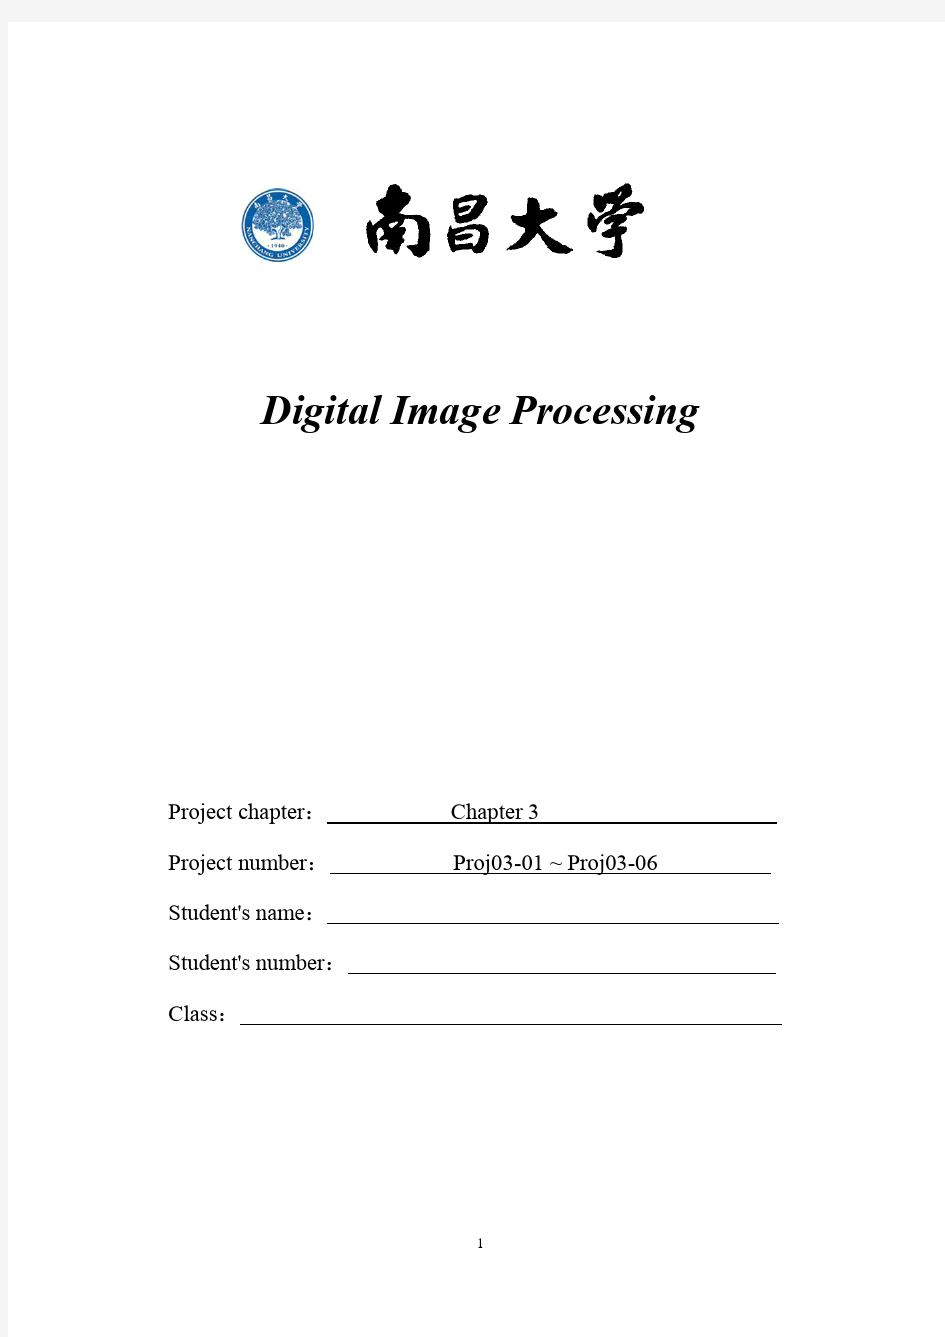 digital image processing projects 数字图像处理 冈萨雷斯 第三章所有程序和报告